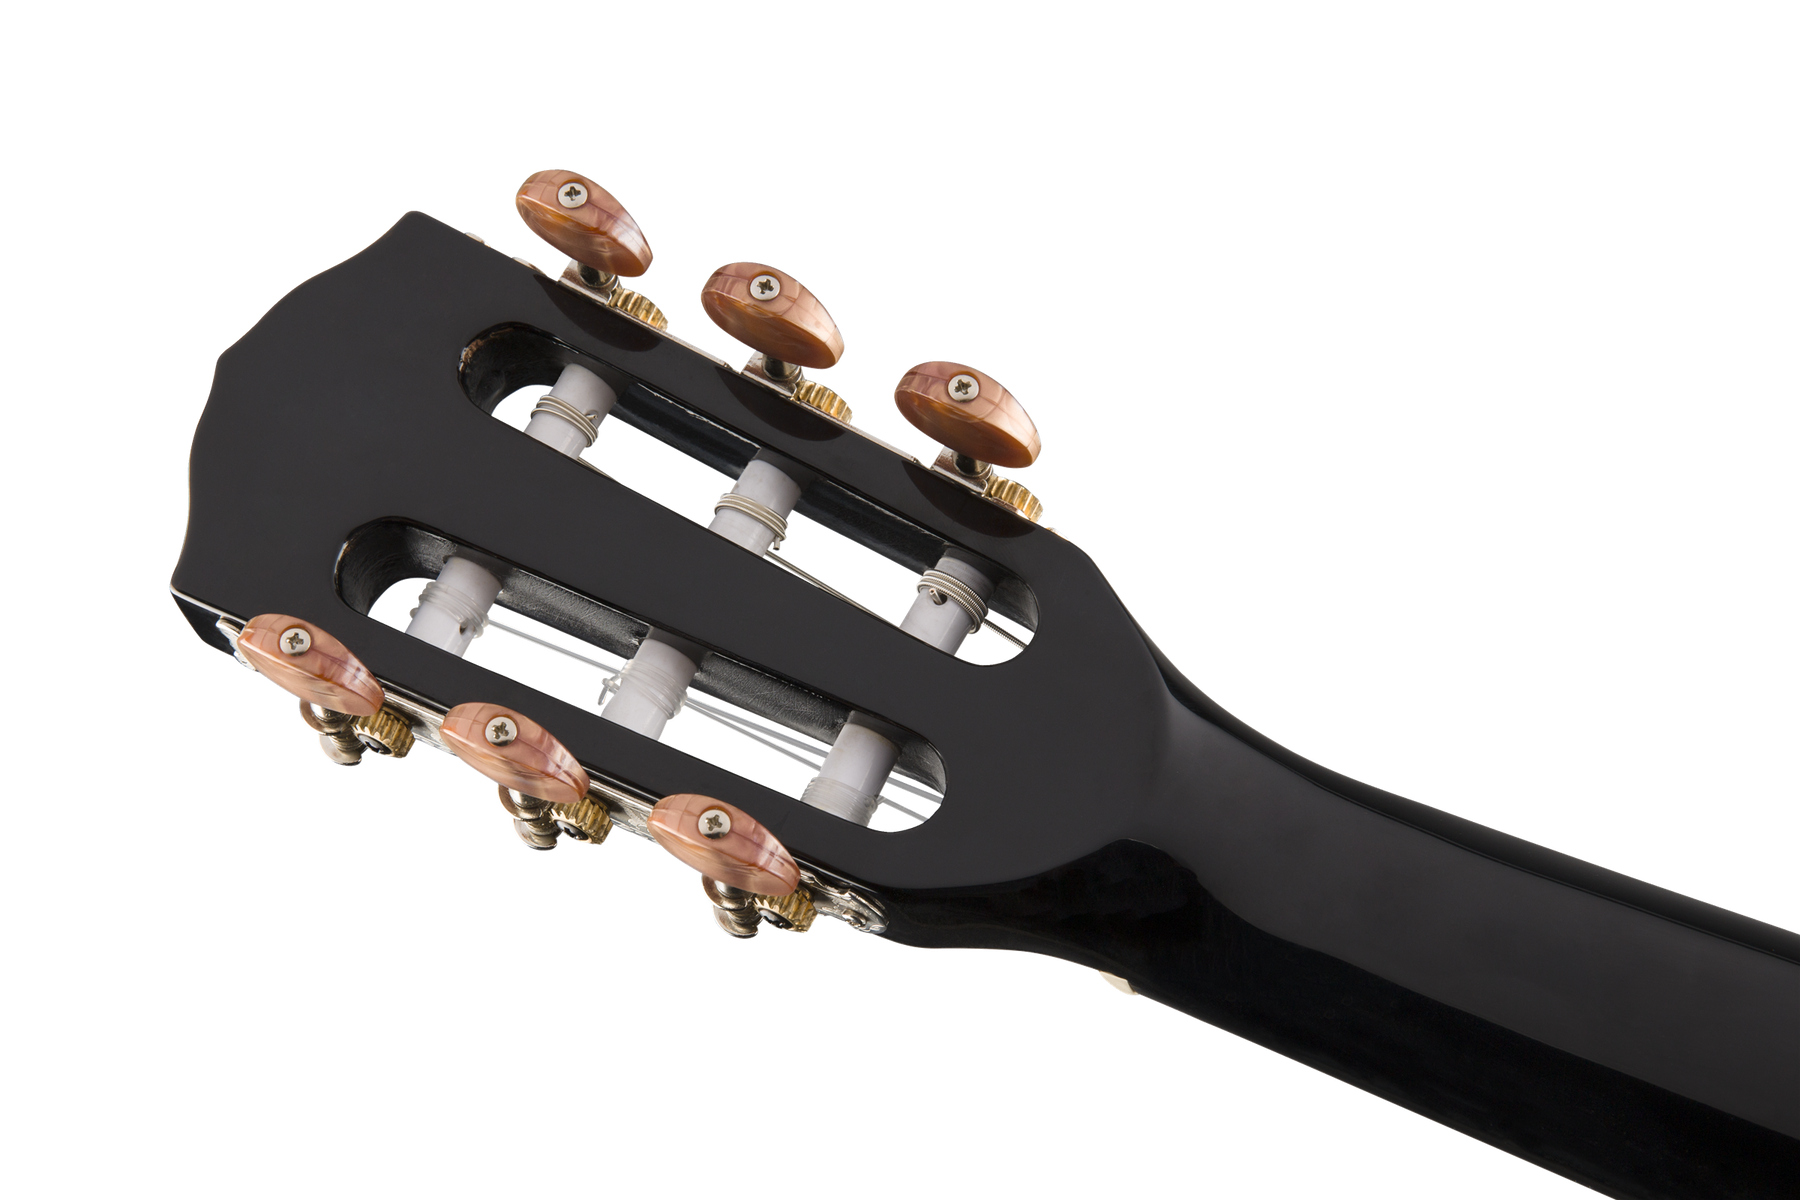 Fender CN-140SCE Nylon Electro Acoustic Guitar - Black with Hard Case